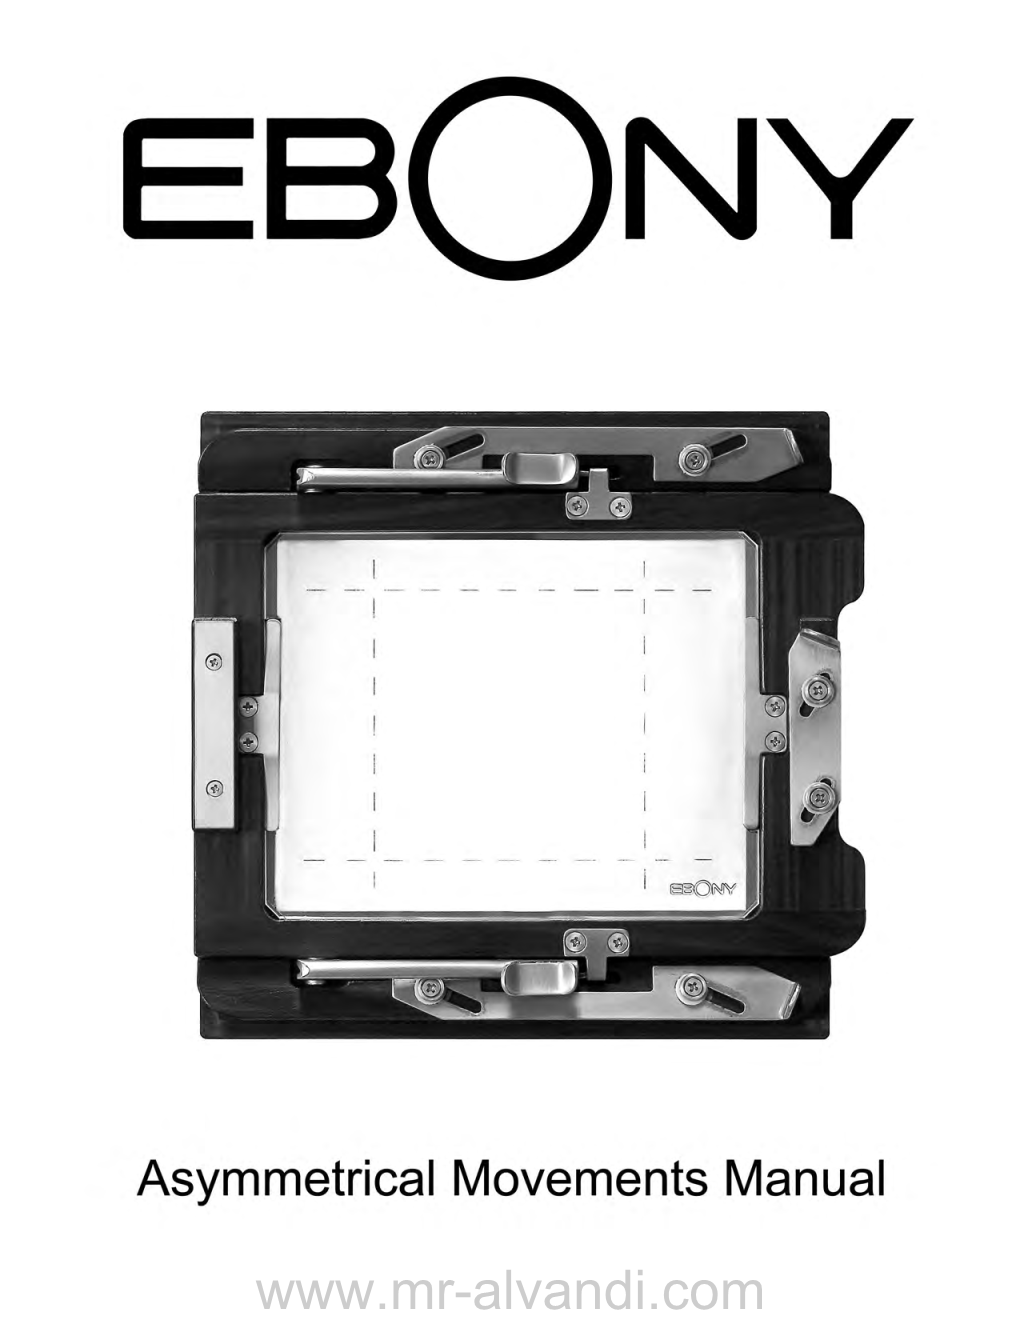 Asymmetrical Camera Movements with Ebony U Model Cameras